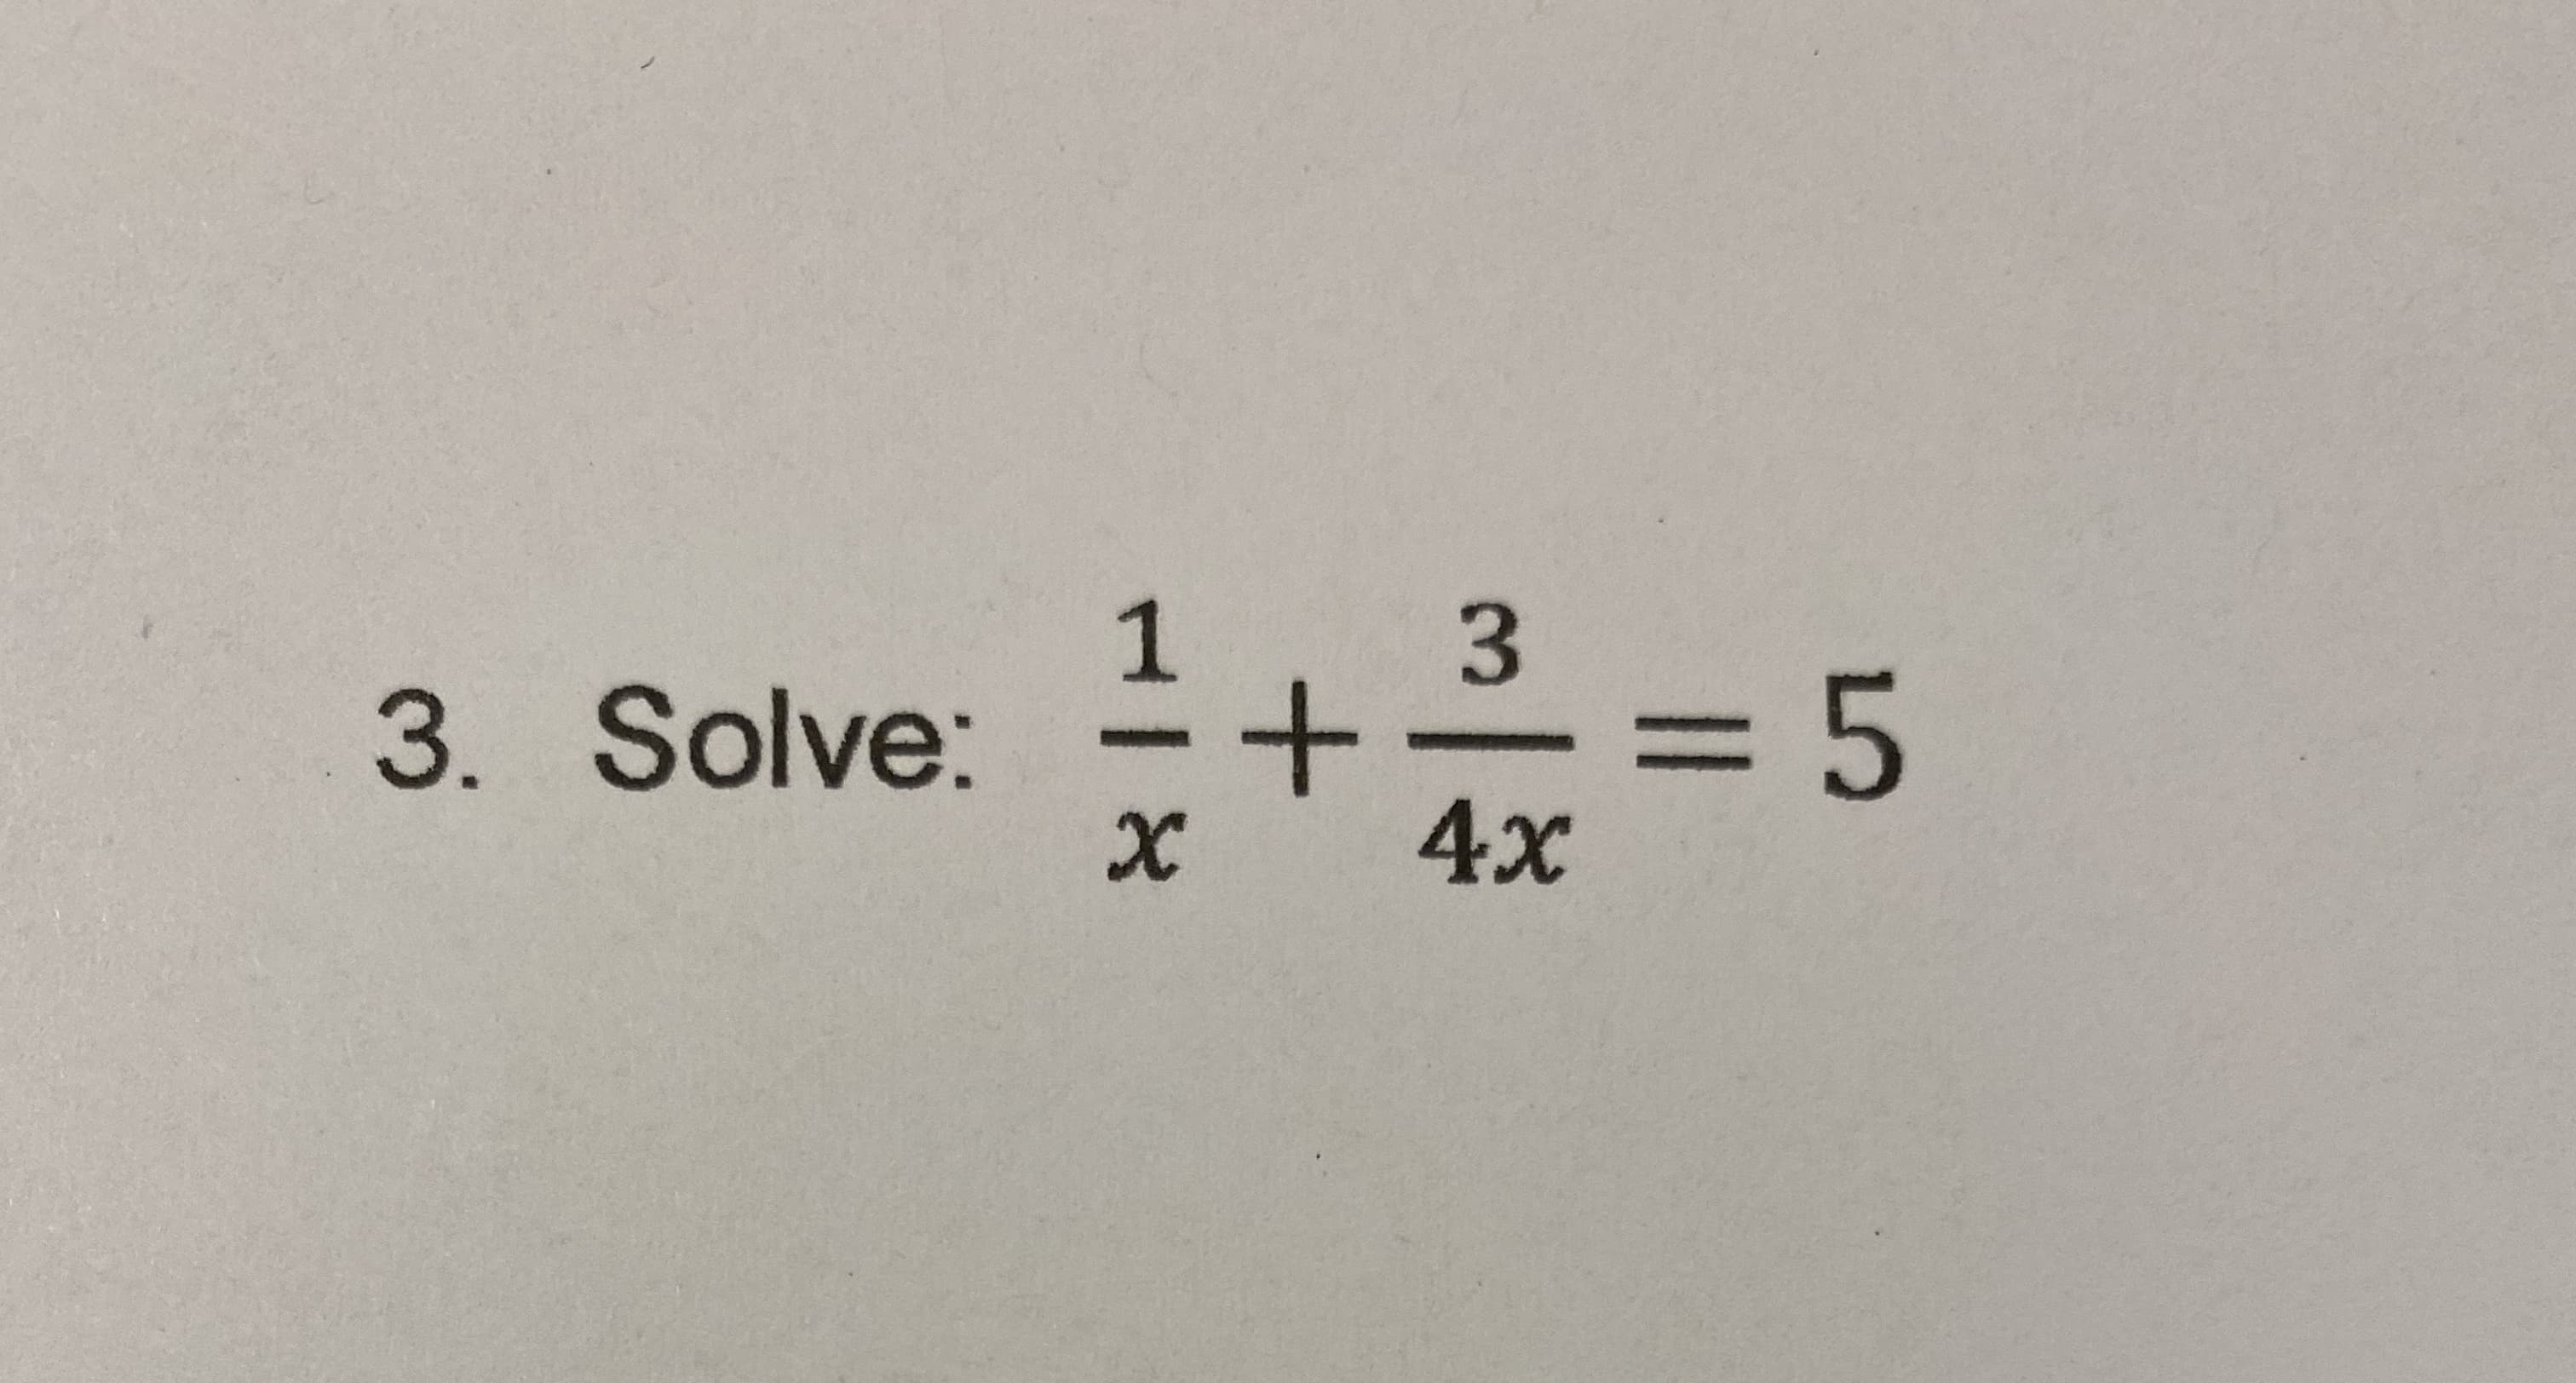 3. Solve:
х
3D5
4x
%3D
10
3.
